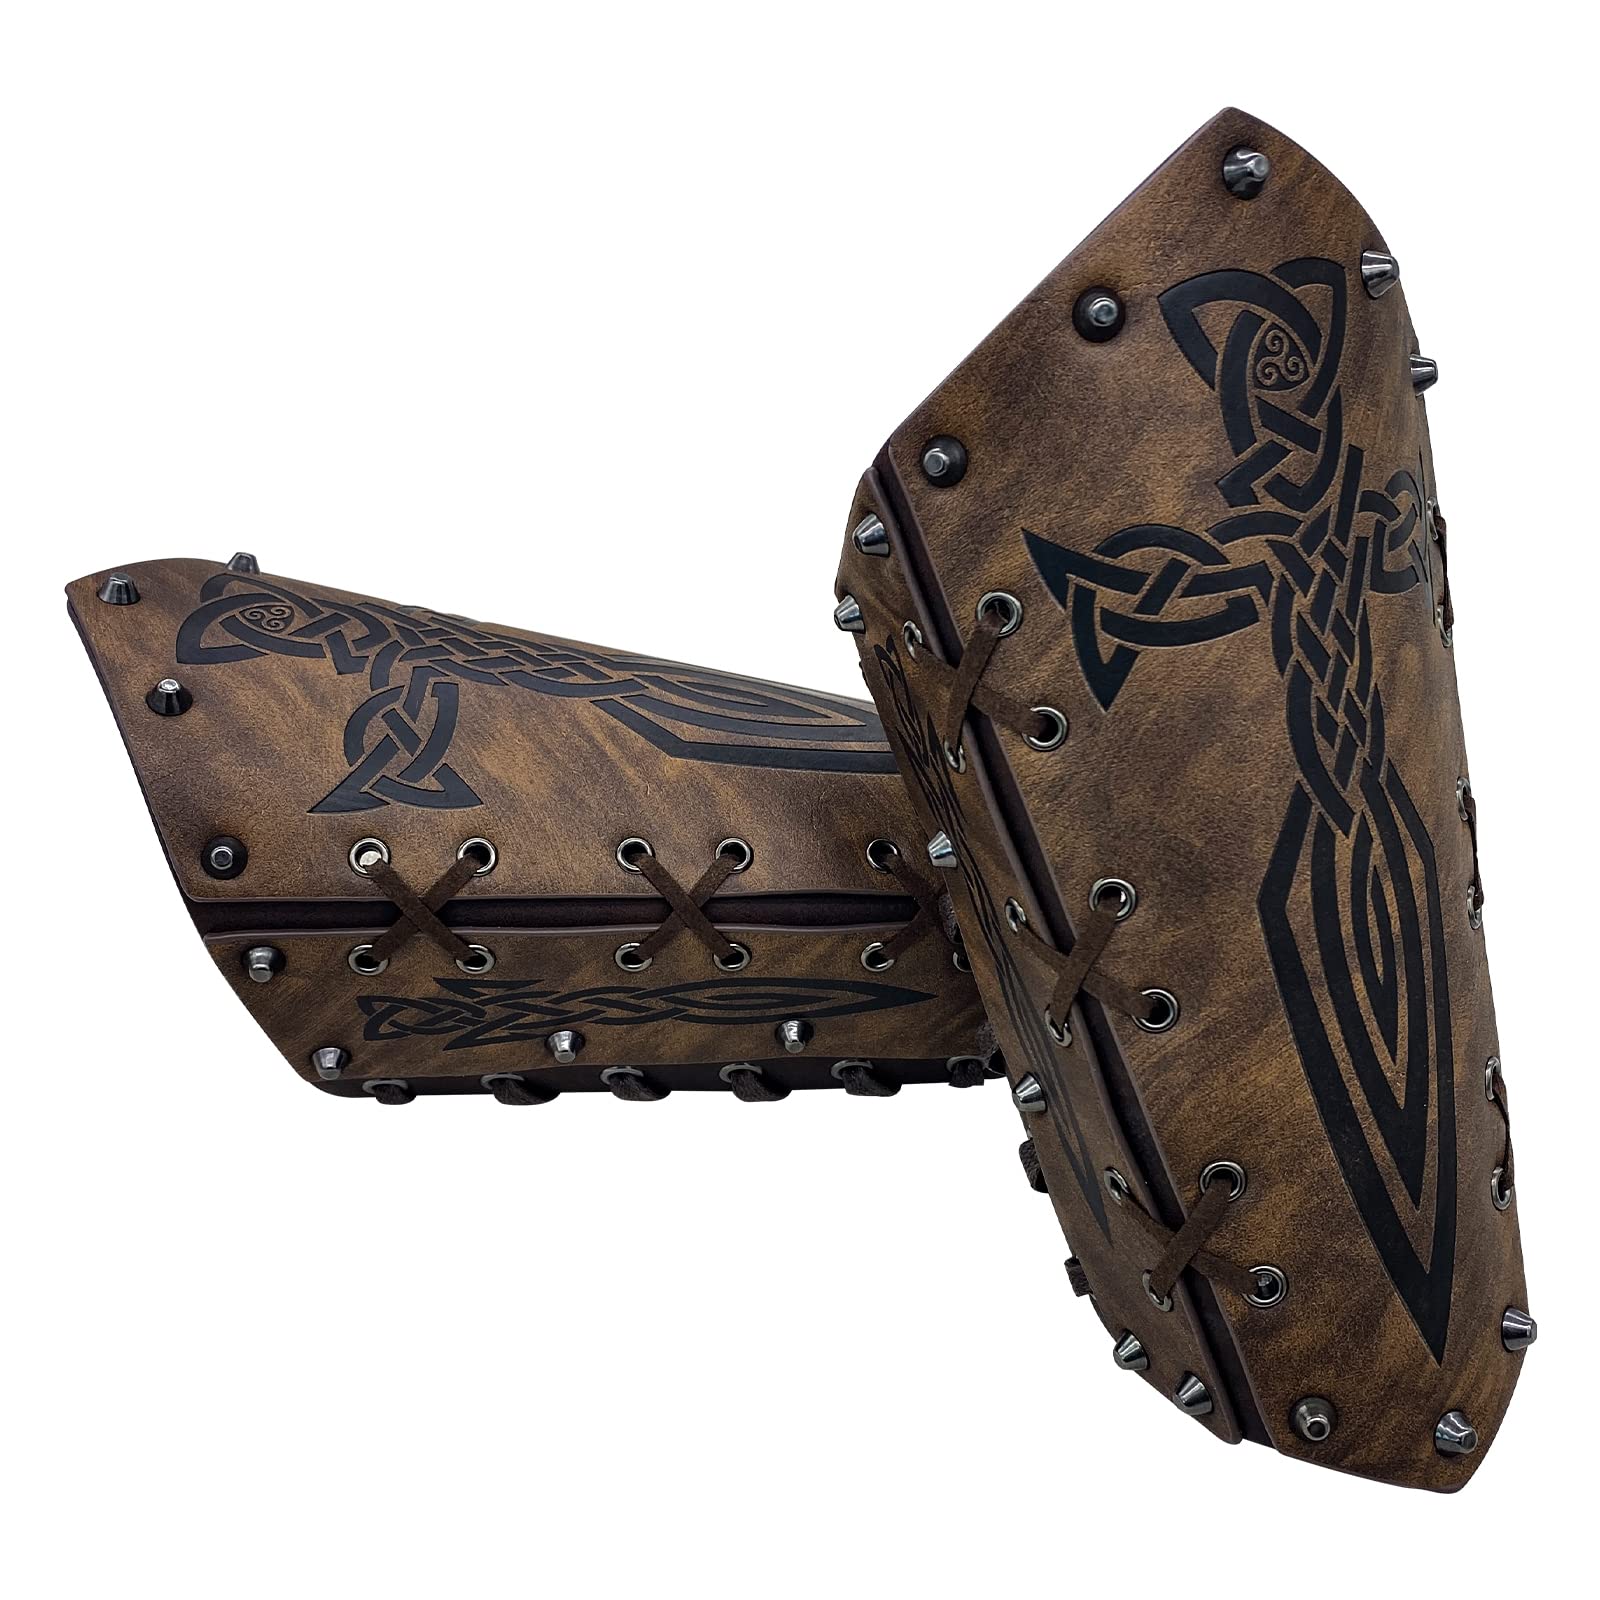  COSFAN Viking Bracers,Leather Armor Cuffs Thor's